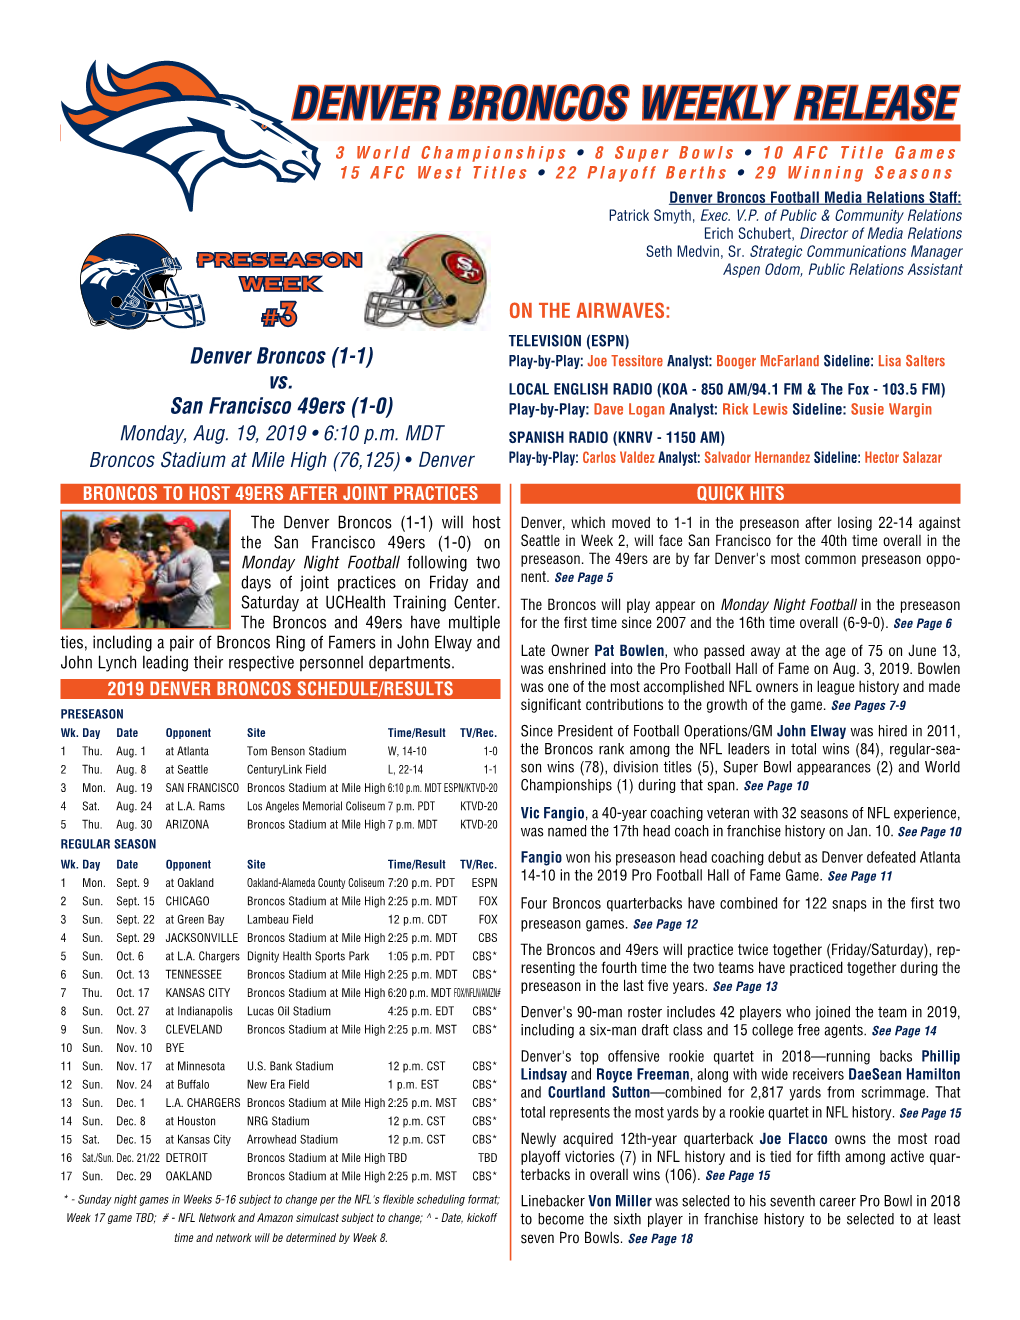 Denver Broncos Weekly Release Packet (Vs. San Francisco, 8/19/19)